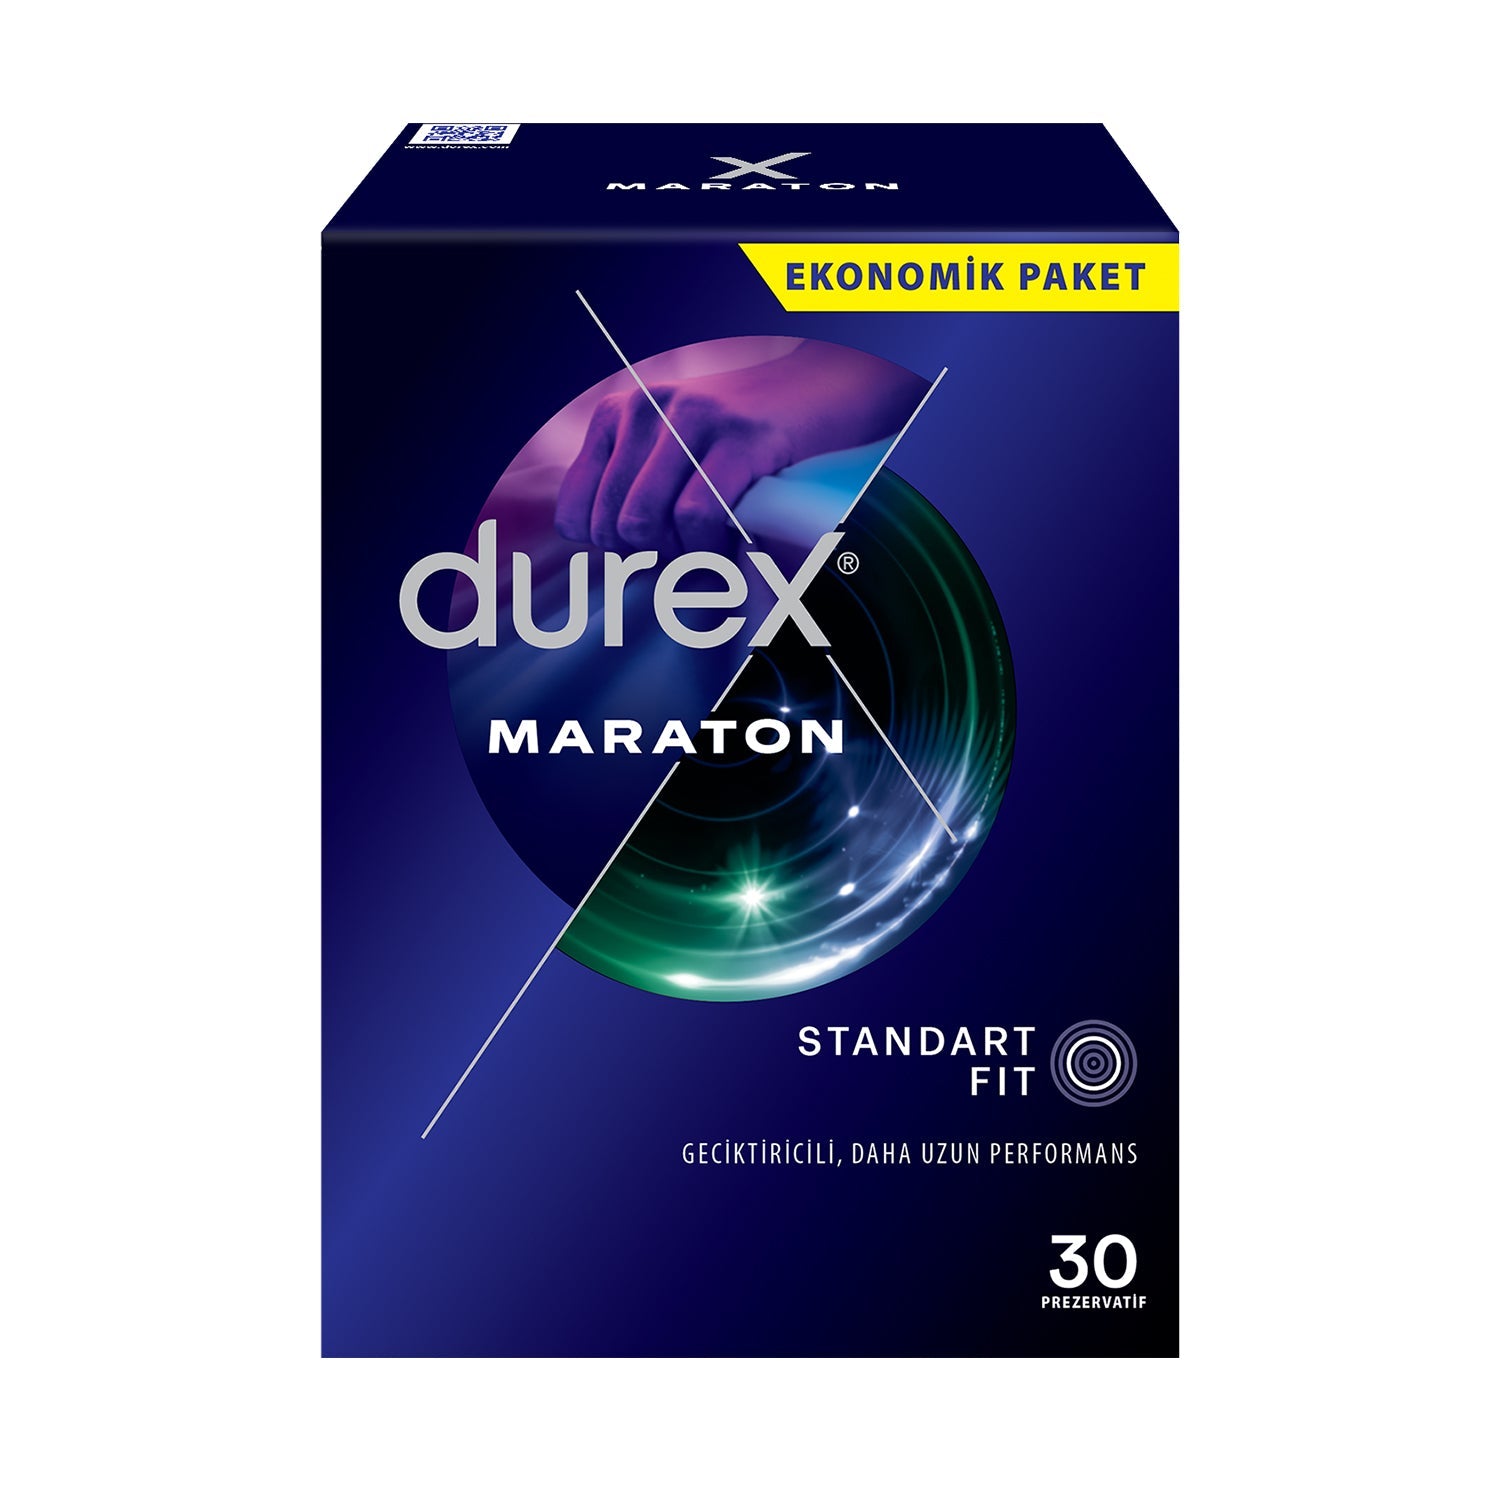 Durex Maraton 30'lu Prezervatif